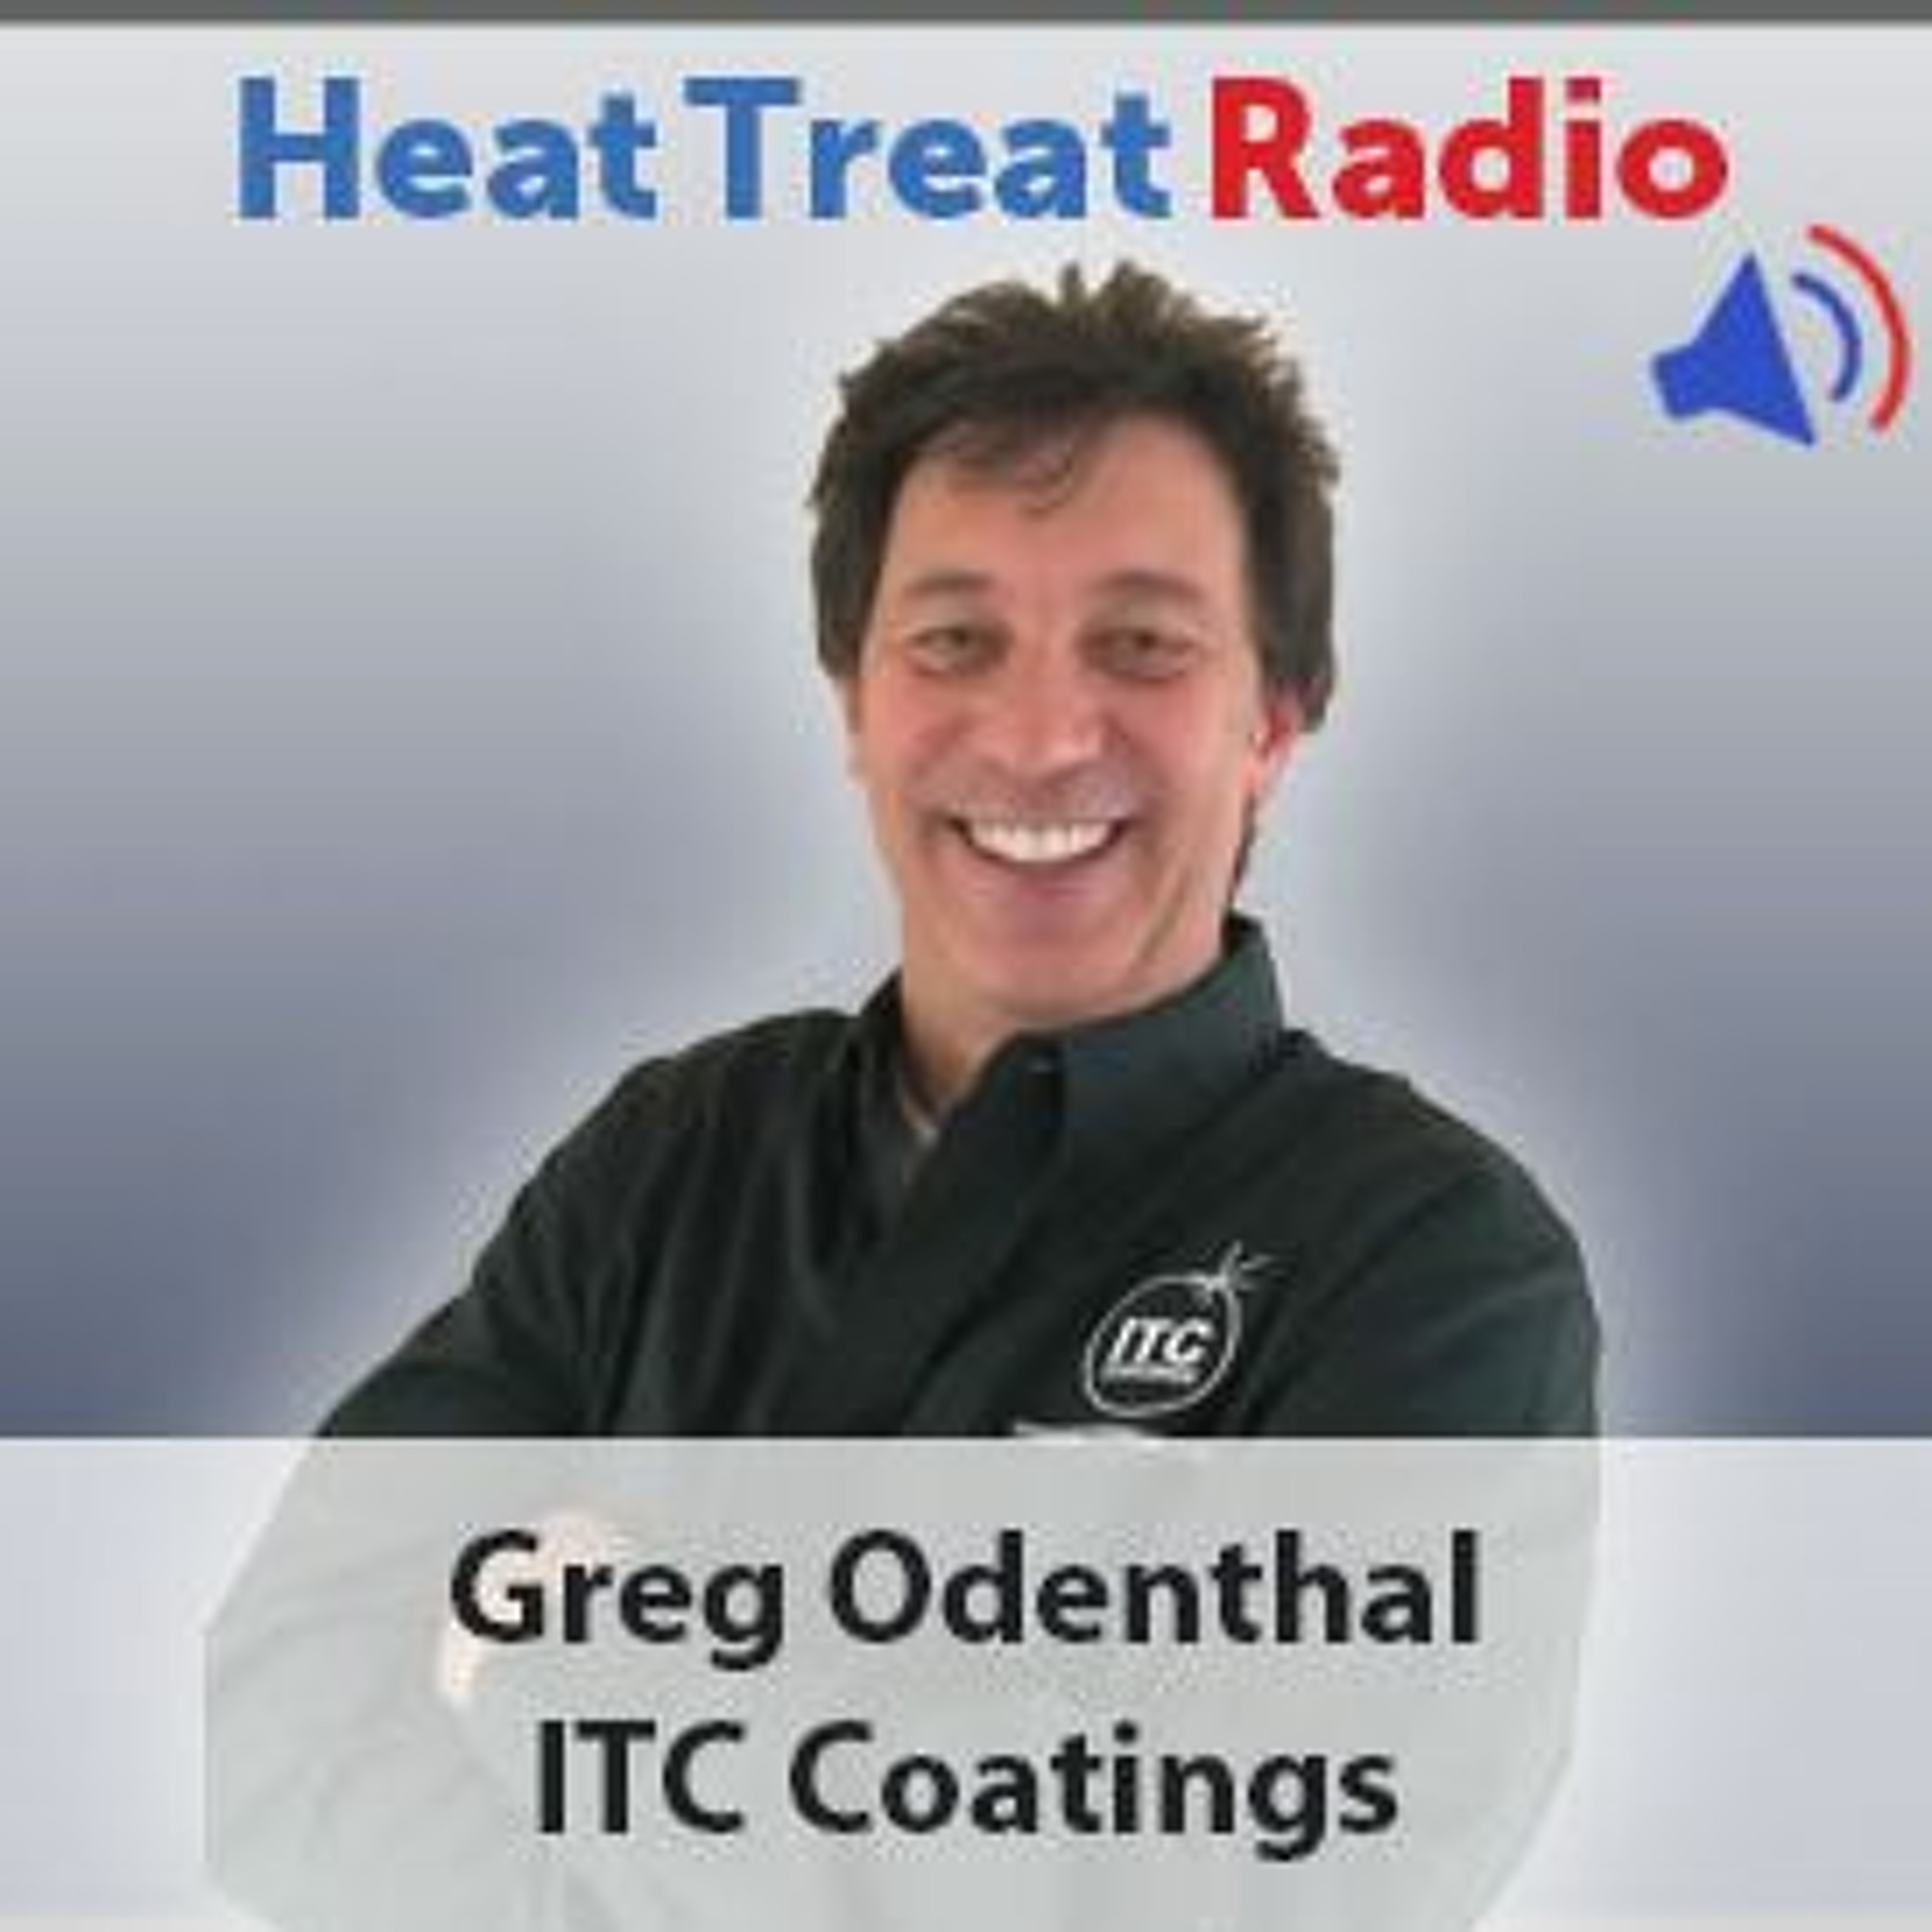 Heat Treat Radio #12: HTT Radio - ITC Coatings